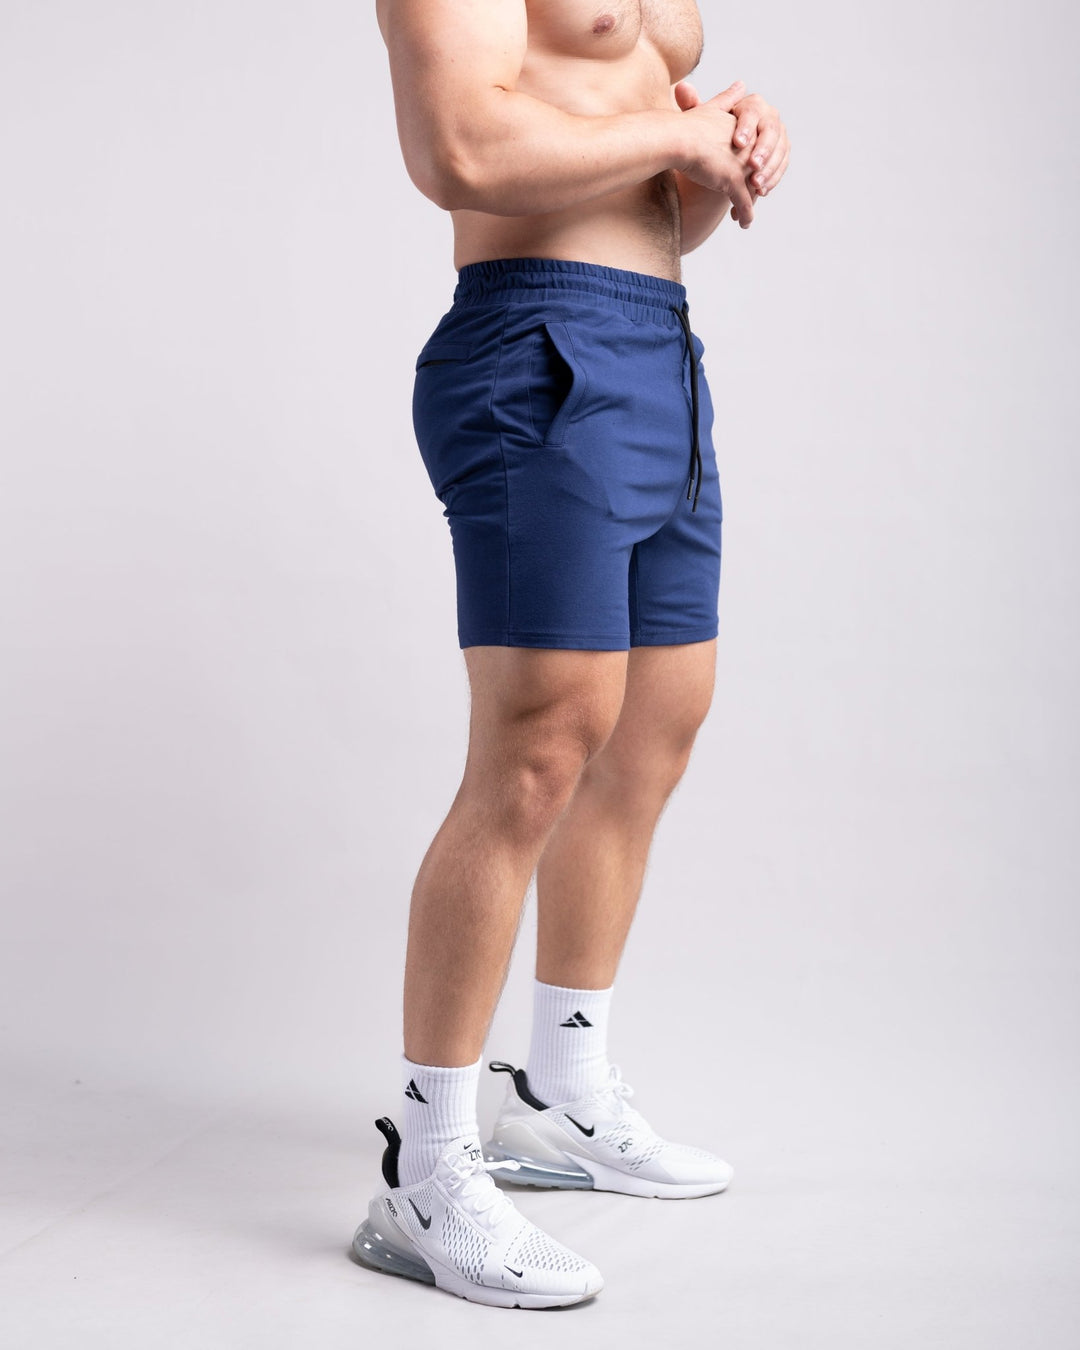 Classic Shorts 2.0 (Navy Blue) - Athletic Aesthetics